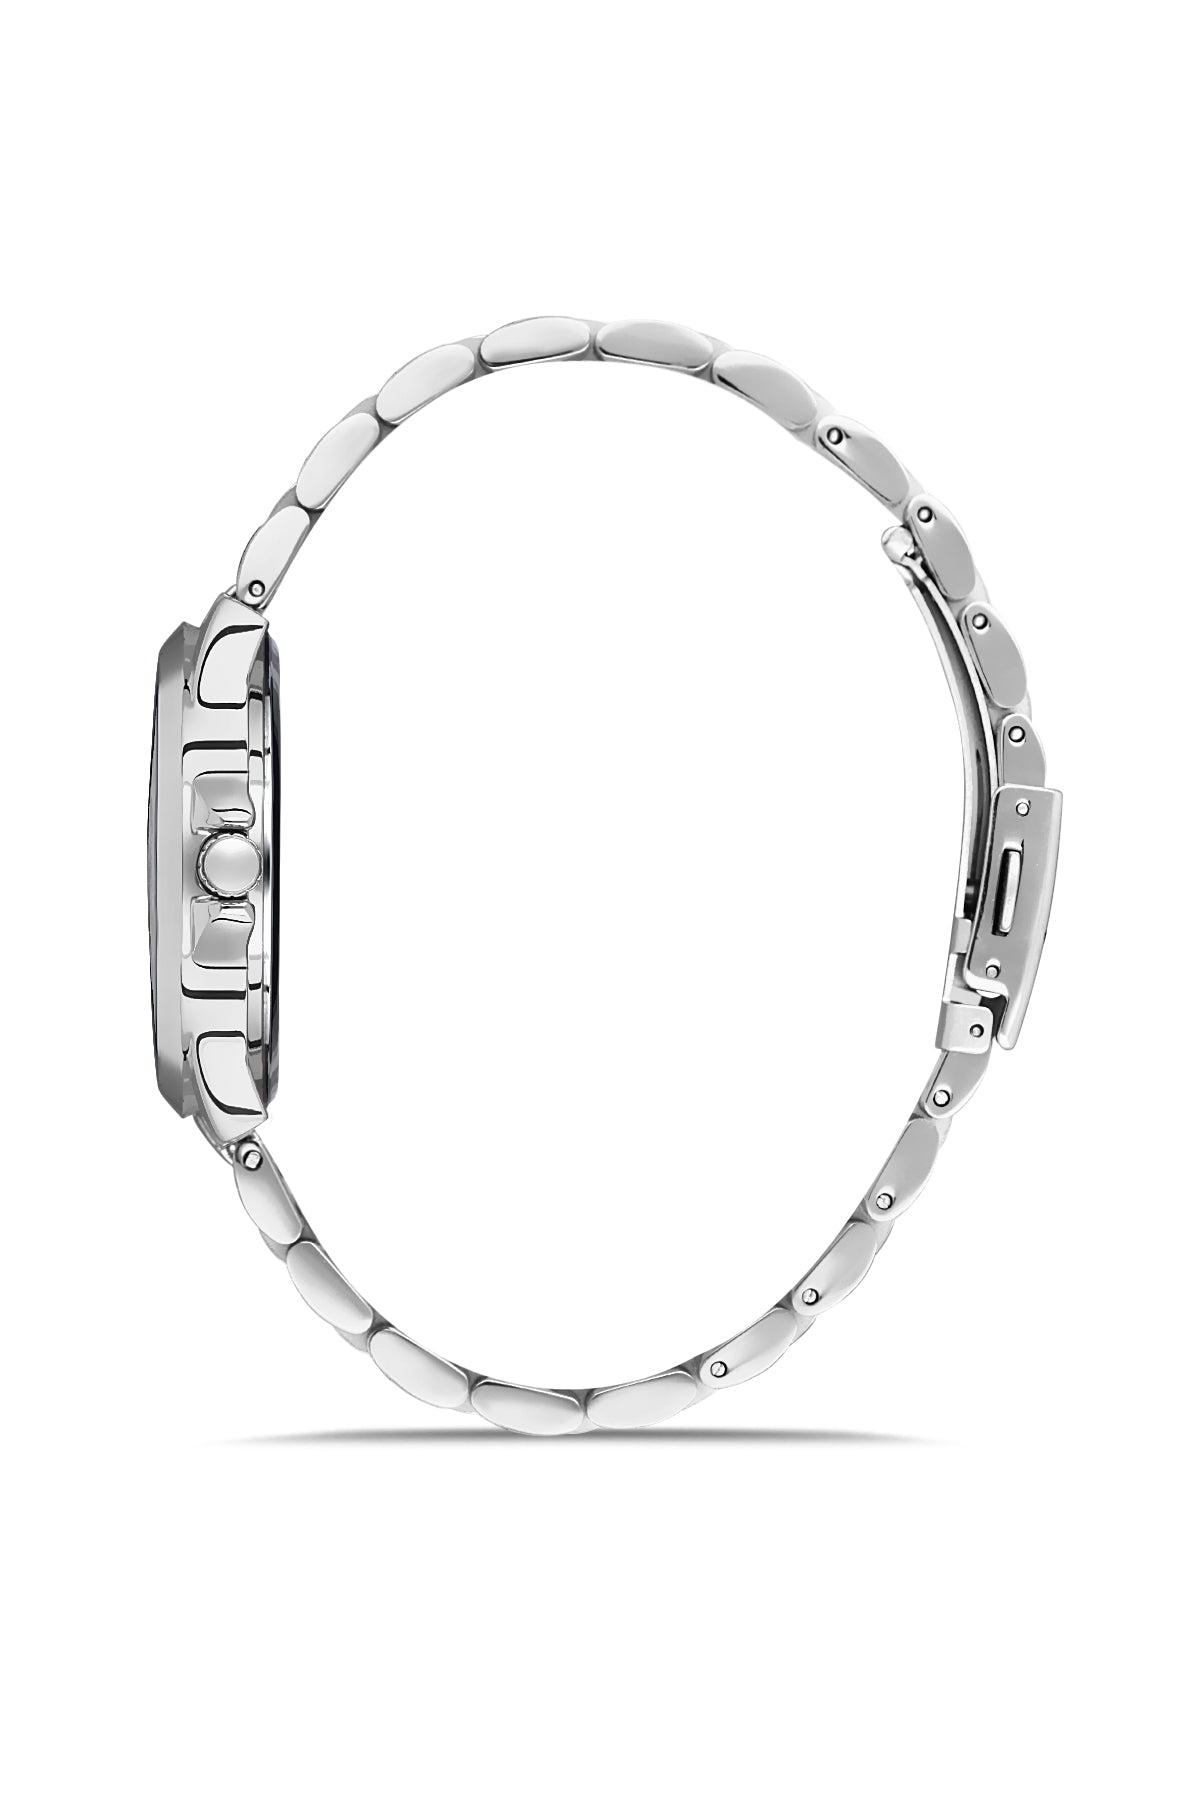 DAVID GUNER Silver Plated Black Dial Women's Wristwatch